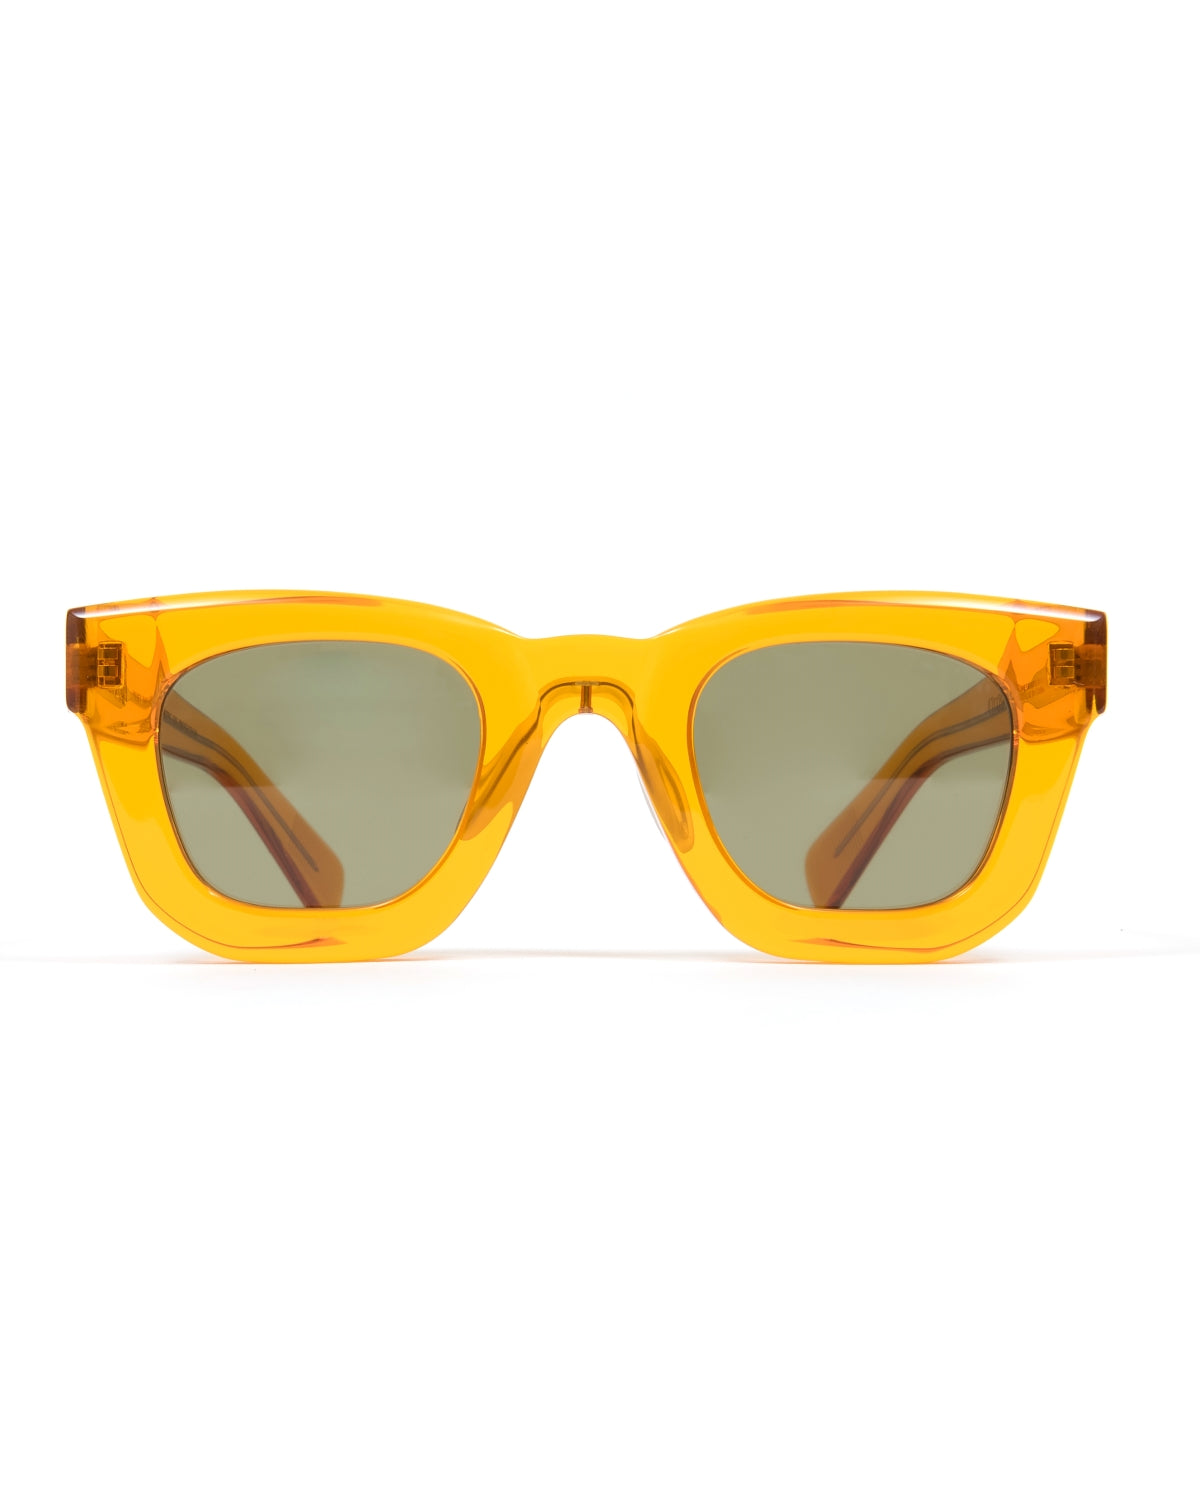 Elia Post Modern Primitive Eye Protection - Orange/Green 1